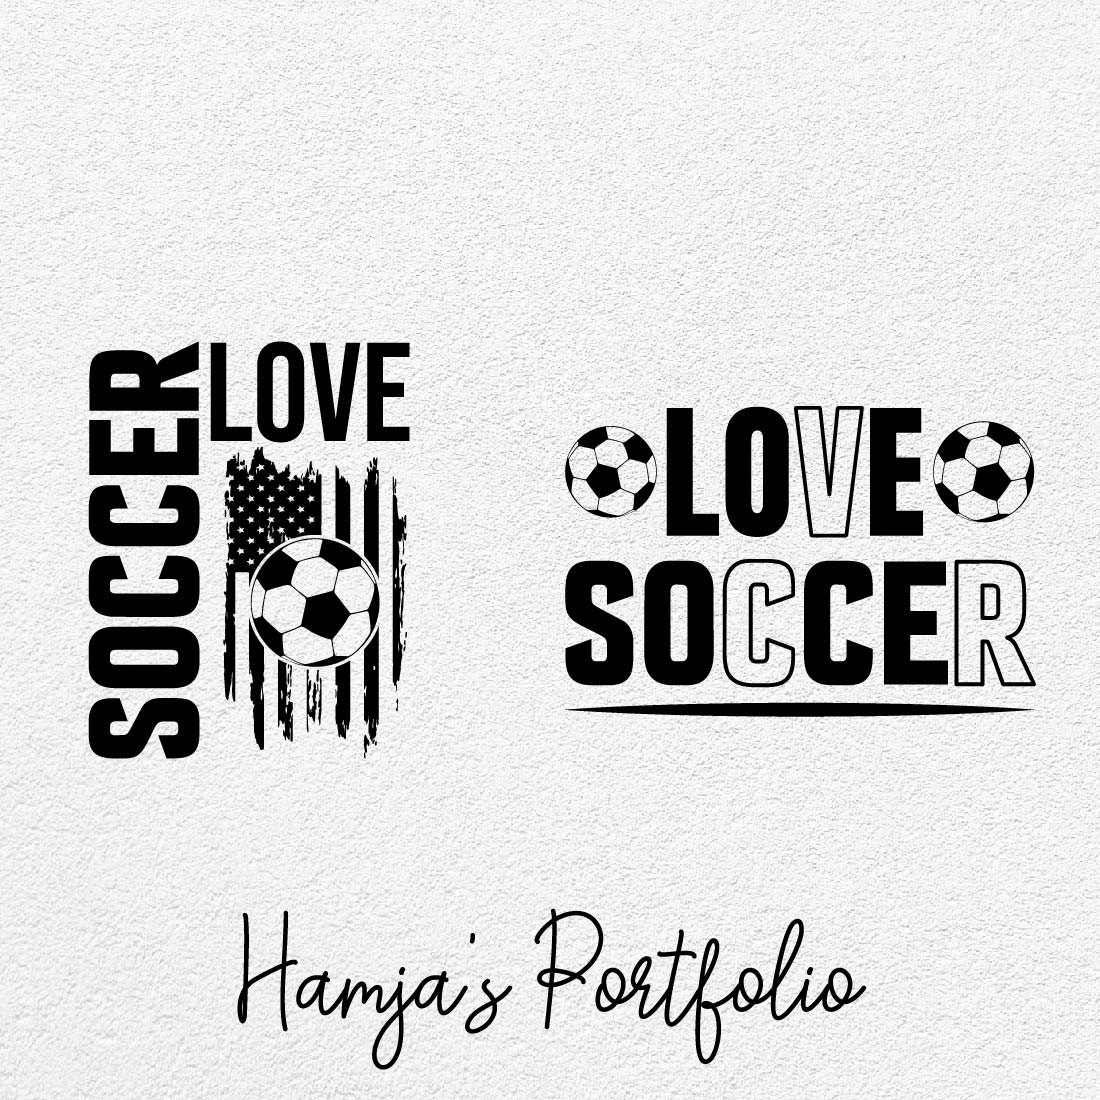 Soccer Lover Vector Svg cover image.